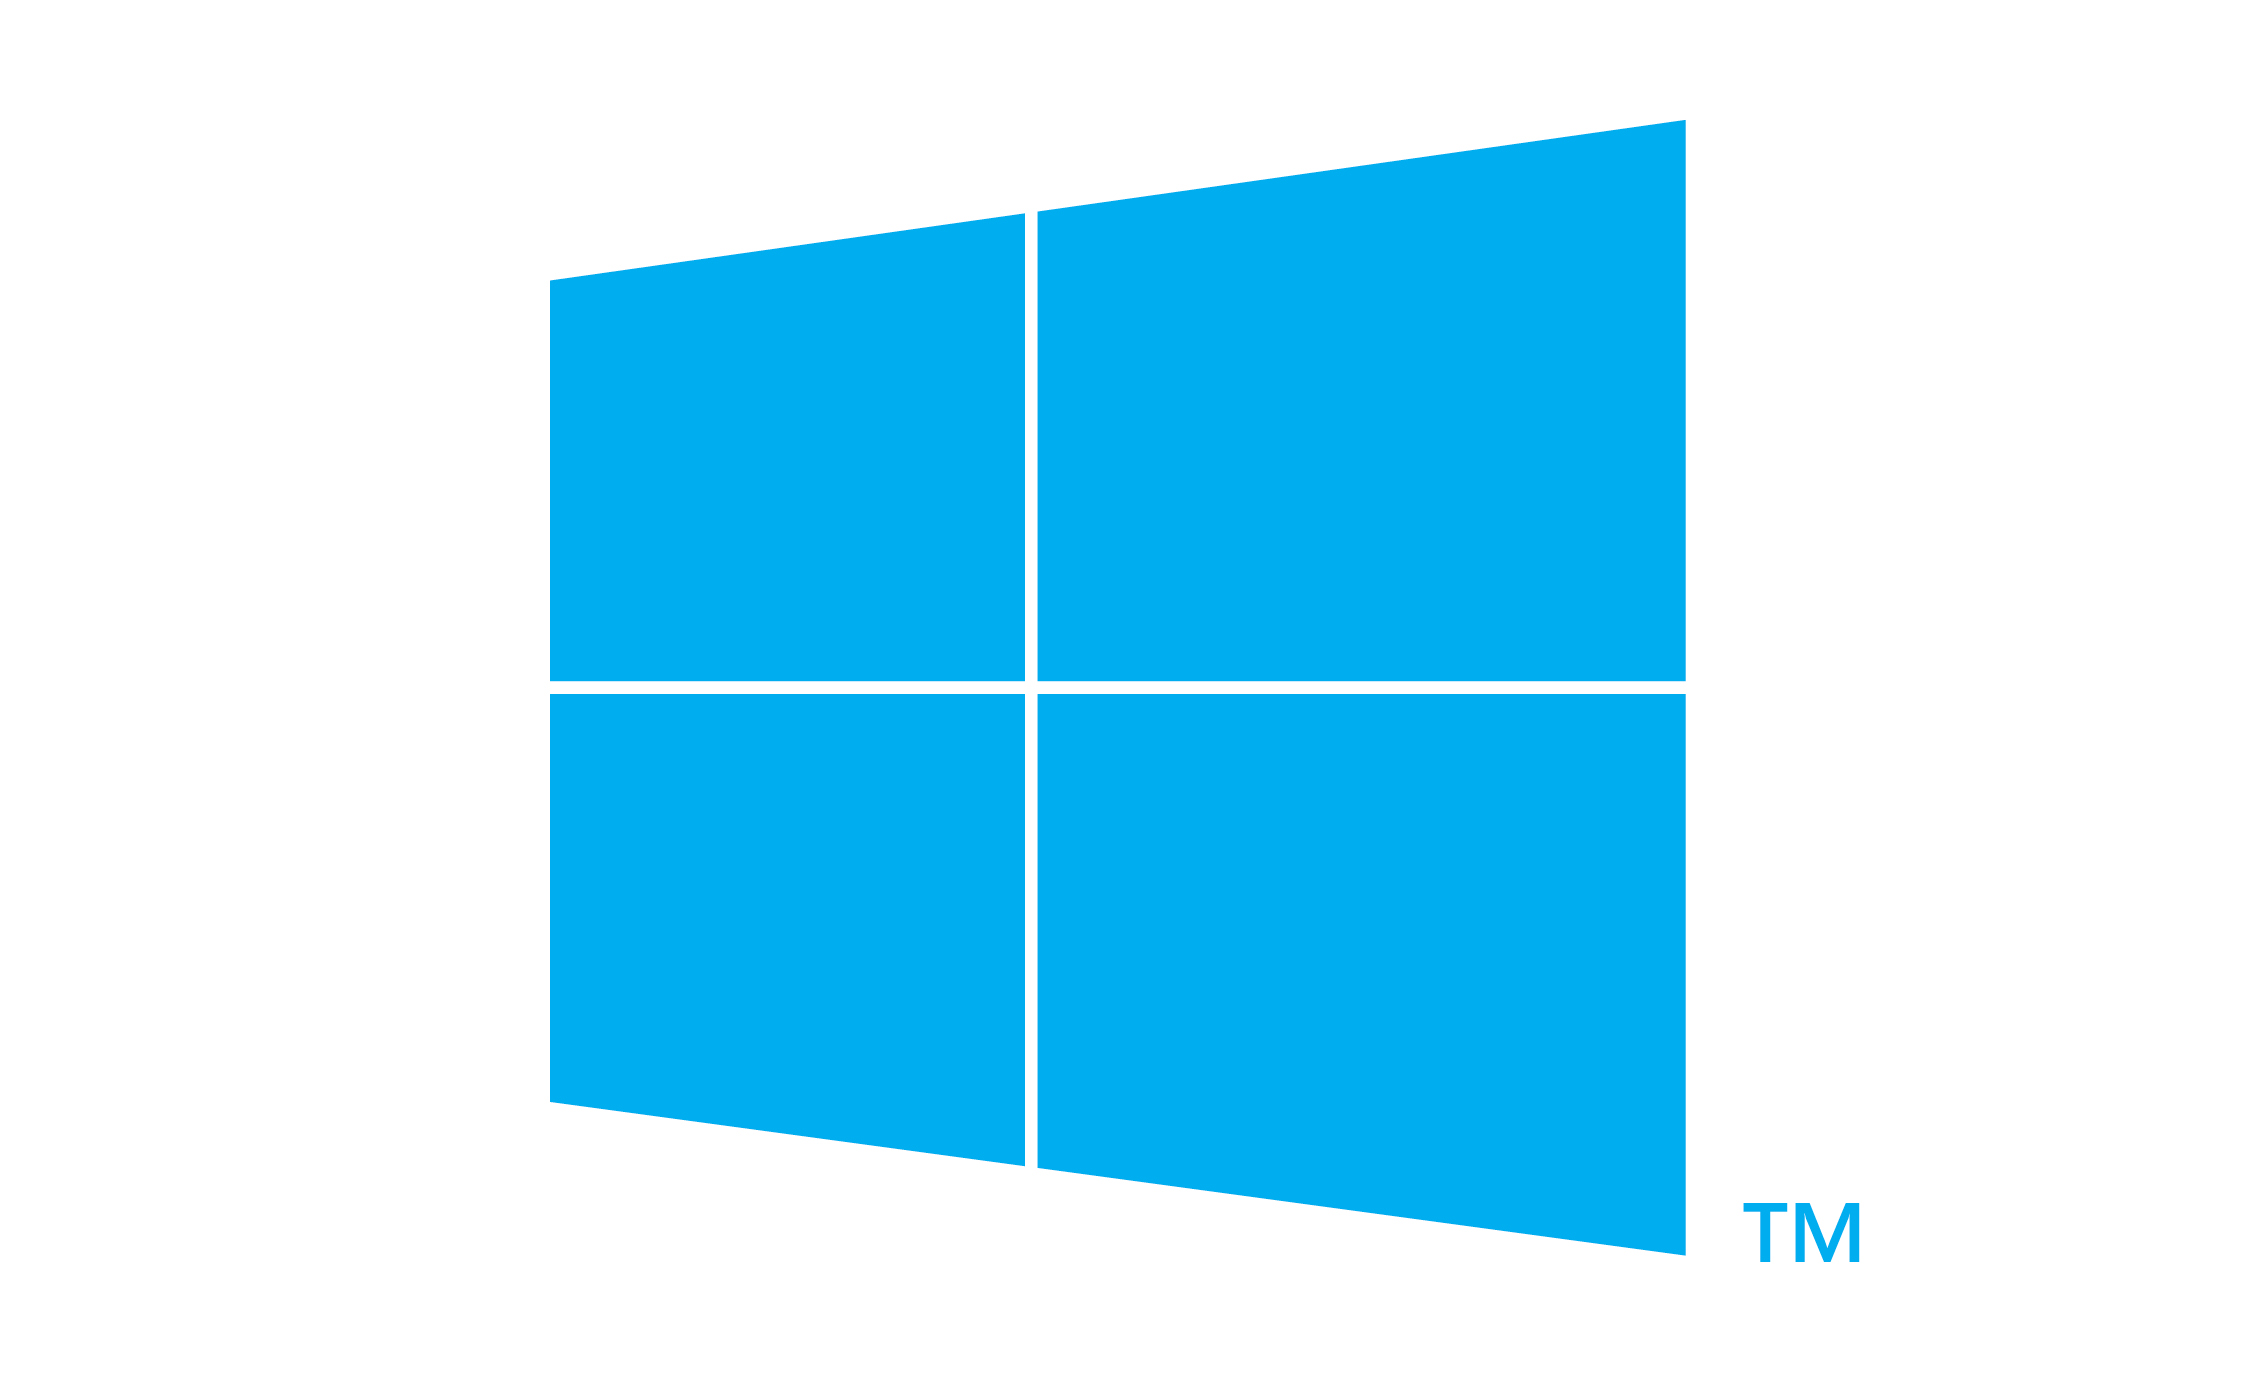 Demo windows. Значок виндовс 10. Значок пуска виндовс 11. Значок Windows значок Windows. Иконки для Windows 10.